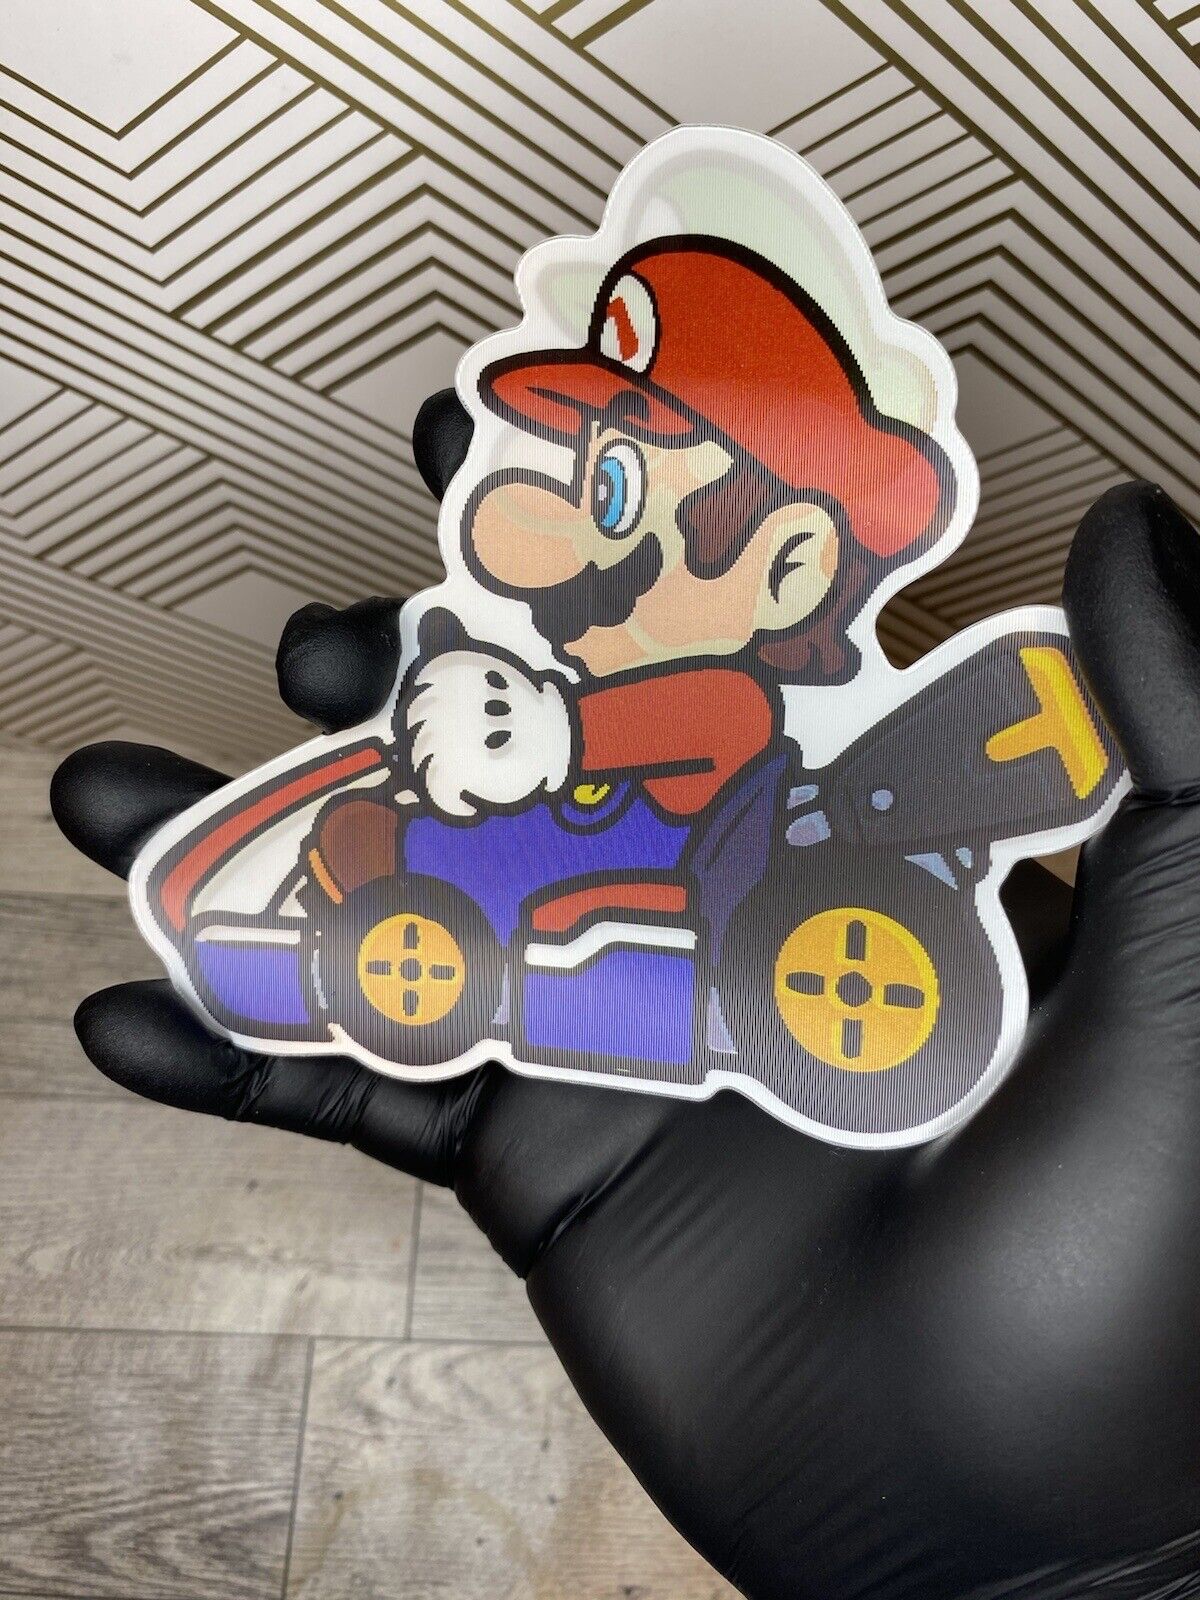 Nintendo Mario Kart Mario & Luigi 3D Lenticular Motion Car Sticker Decal White